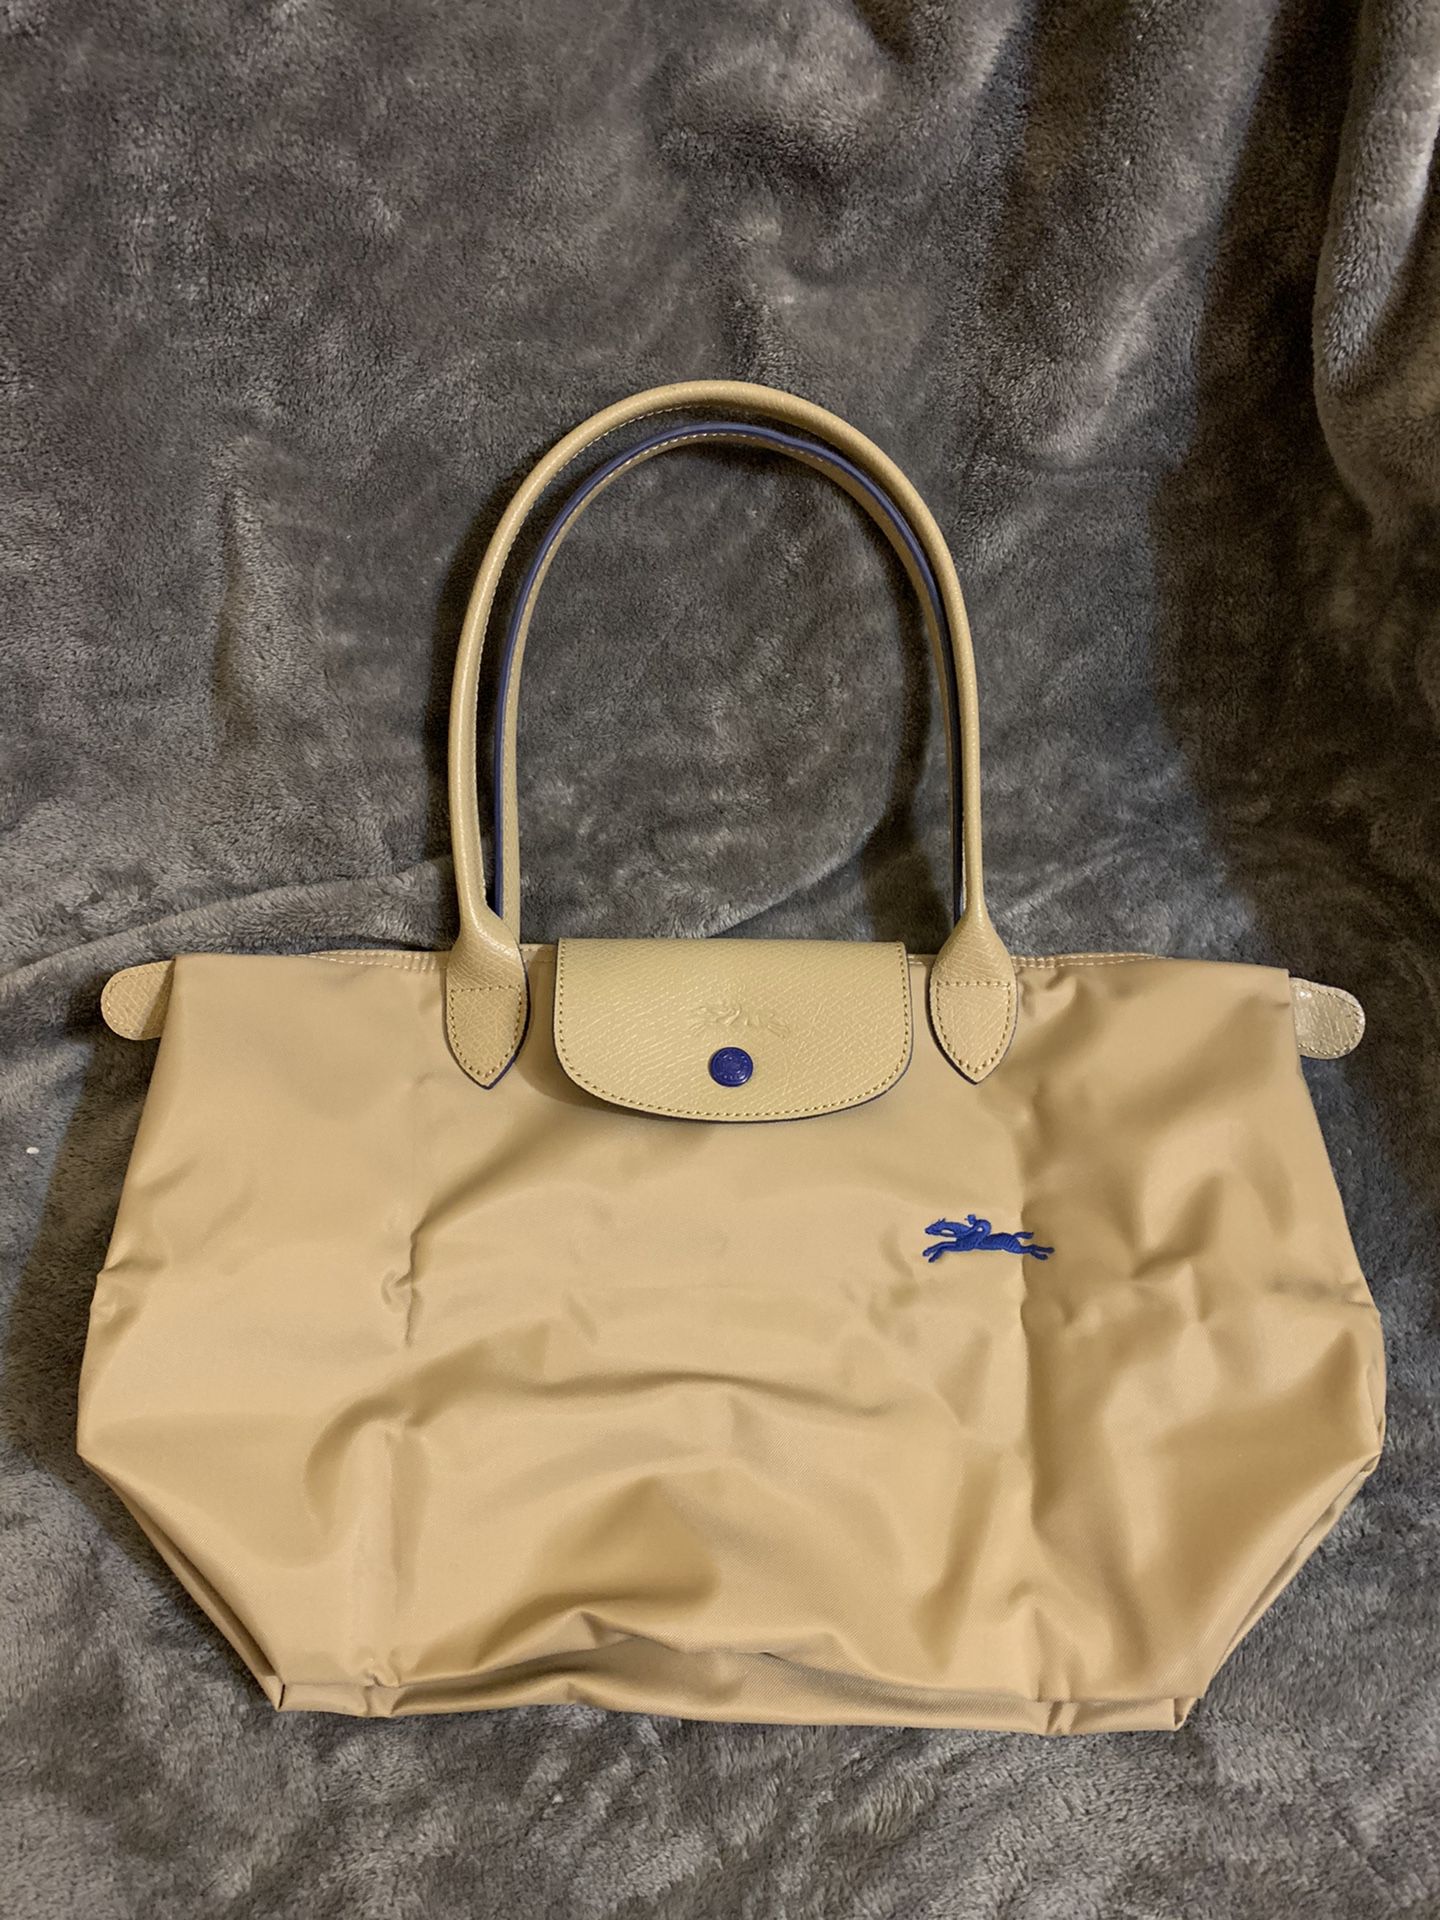 LONGCHAMP LE PLIAGE CLUB tote bag small size 841 beige